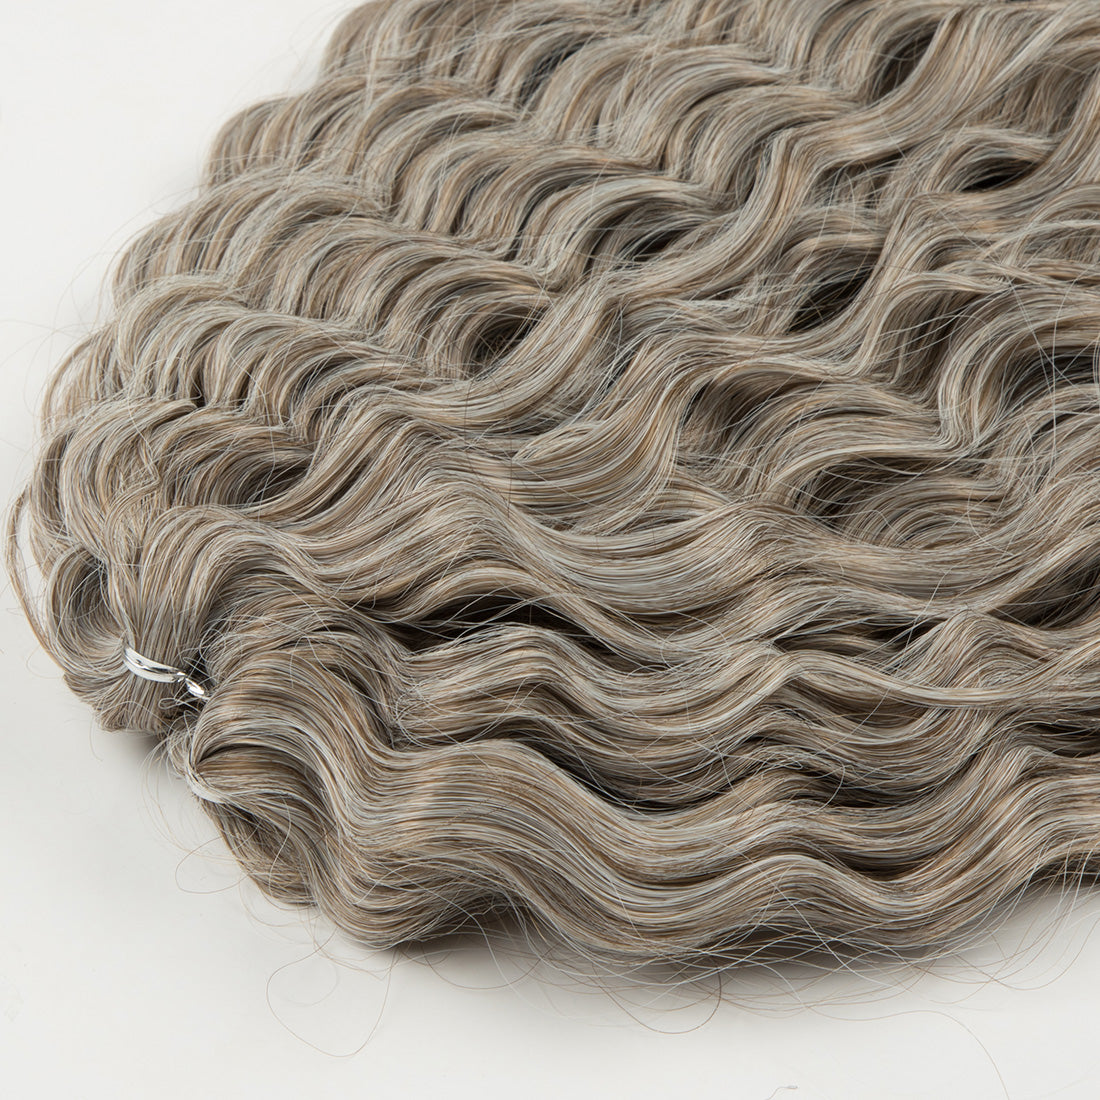 3 PCS Synthetic Braid Hair Ombre Blonde Brown 22 Inch Deep Wave Braidi –  Noble Hair